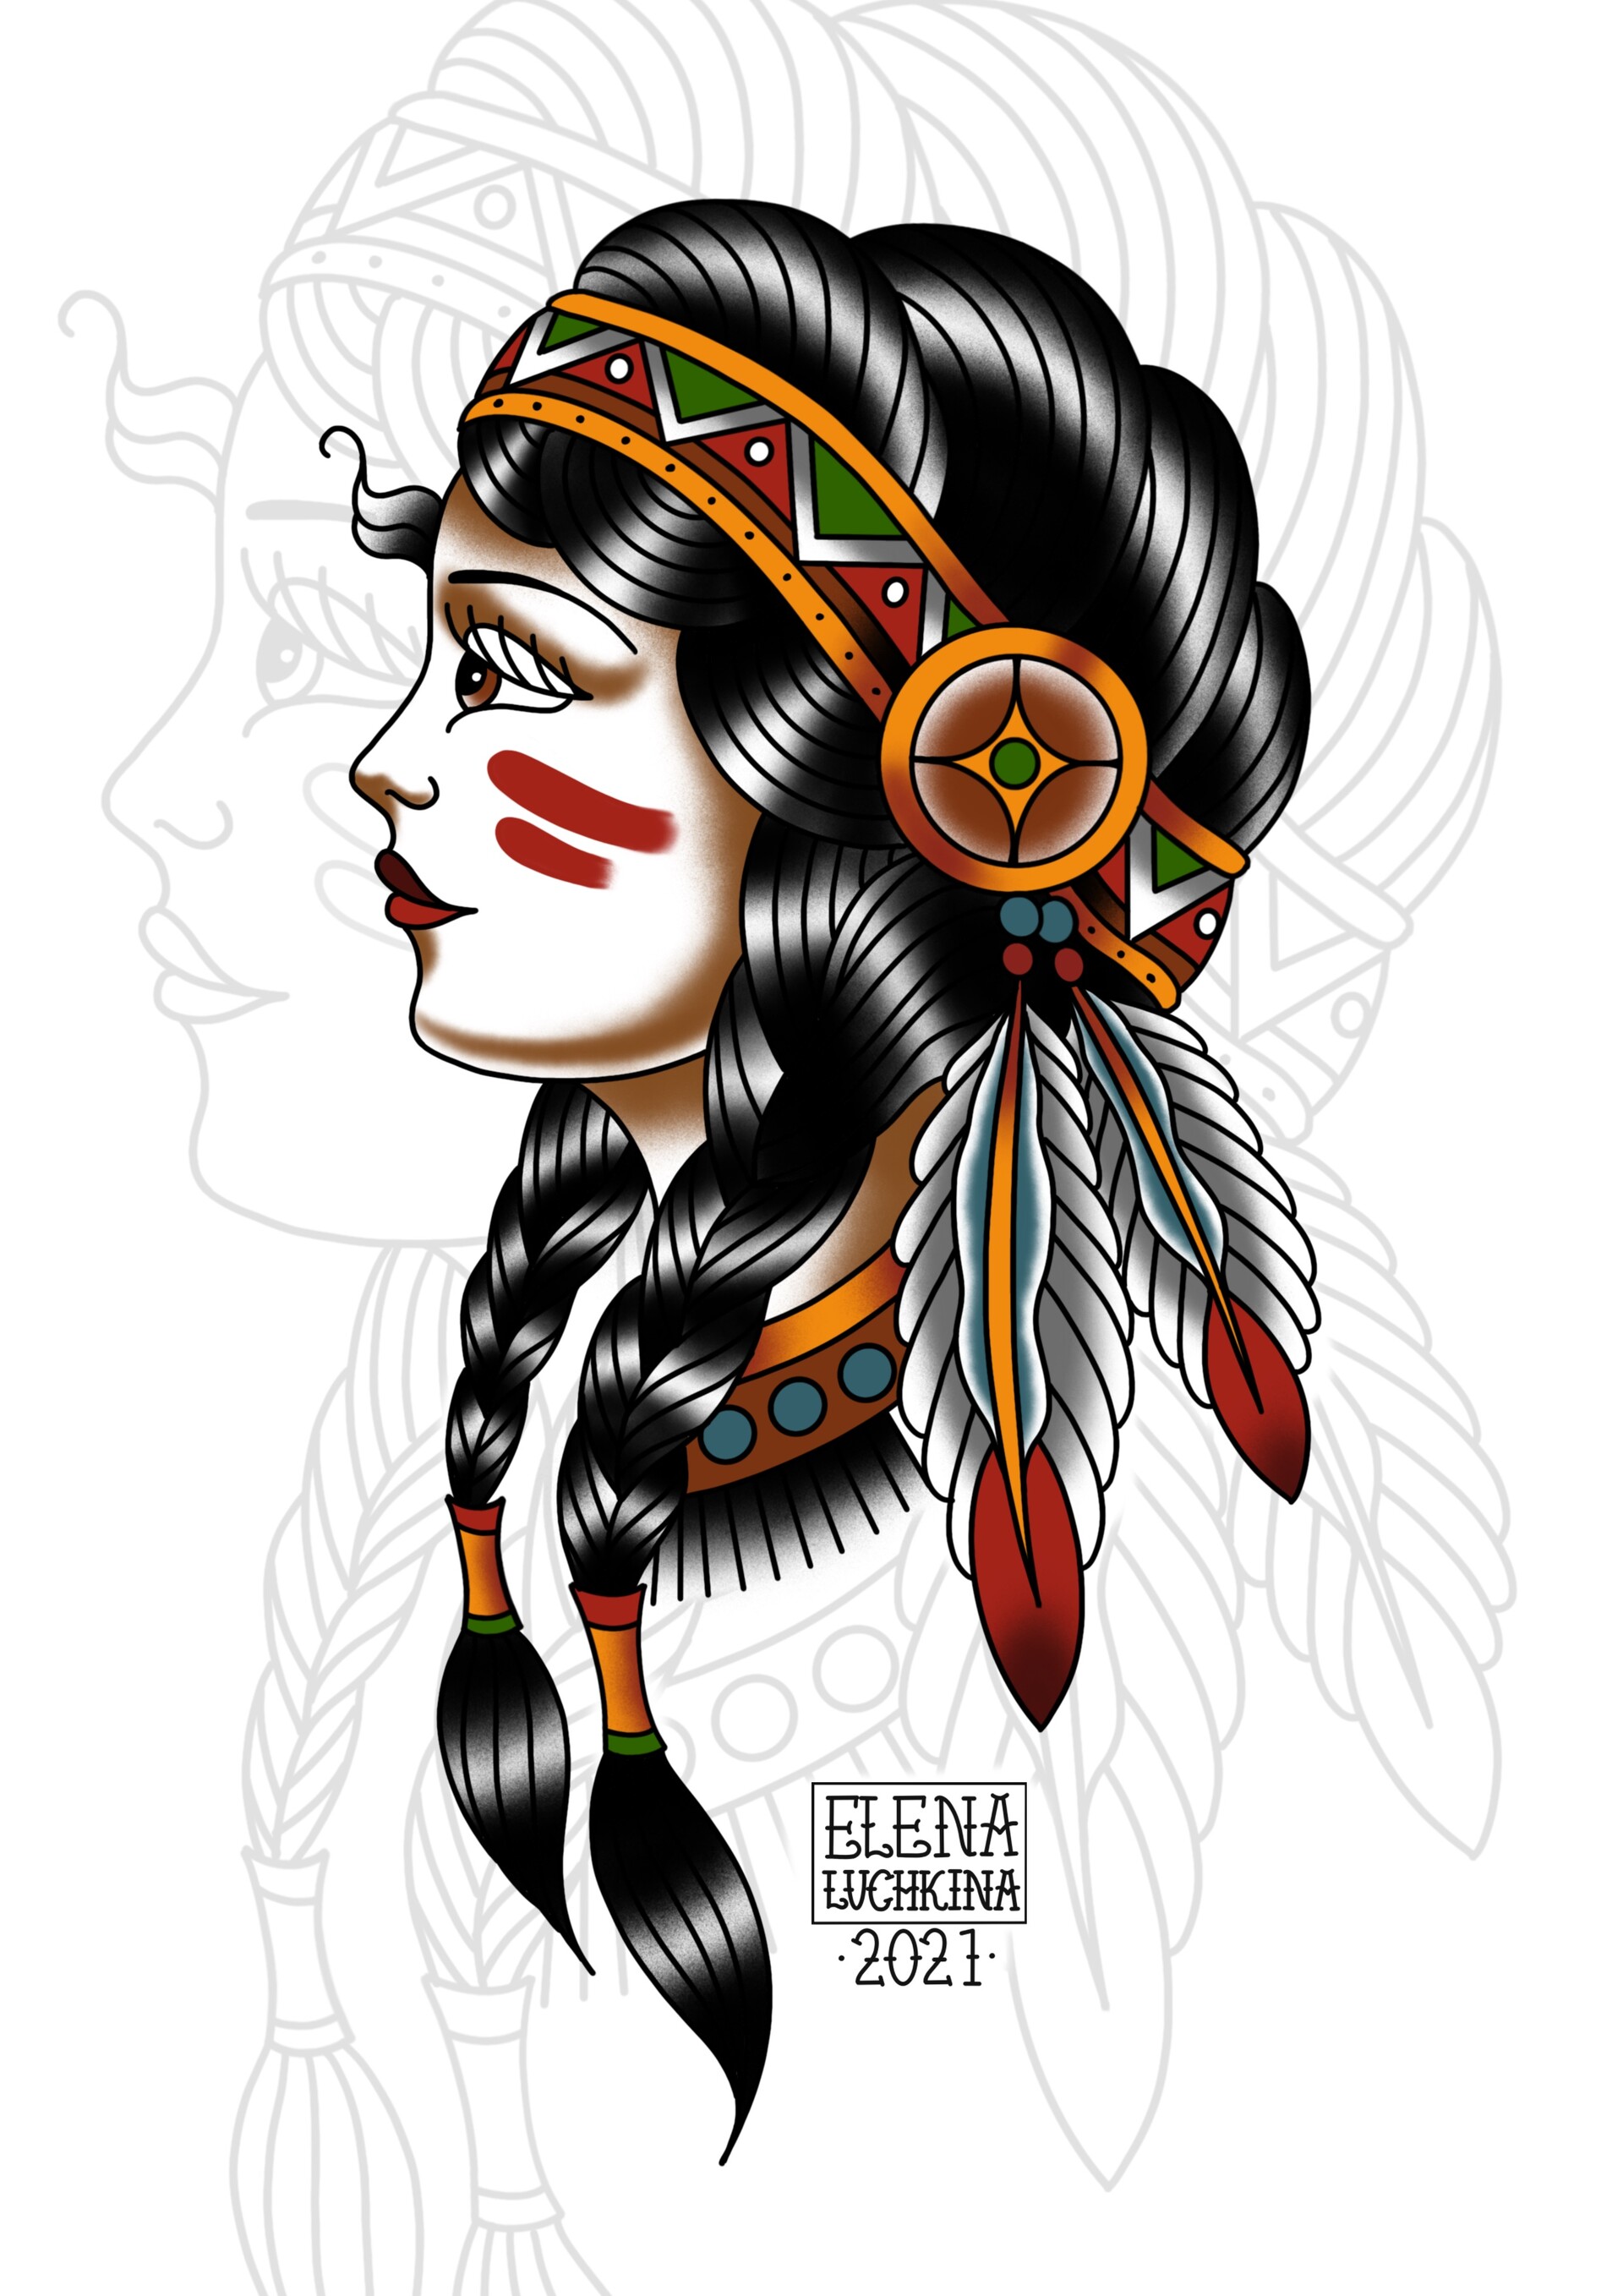 ArtStation - Old School native american girl tattoo design